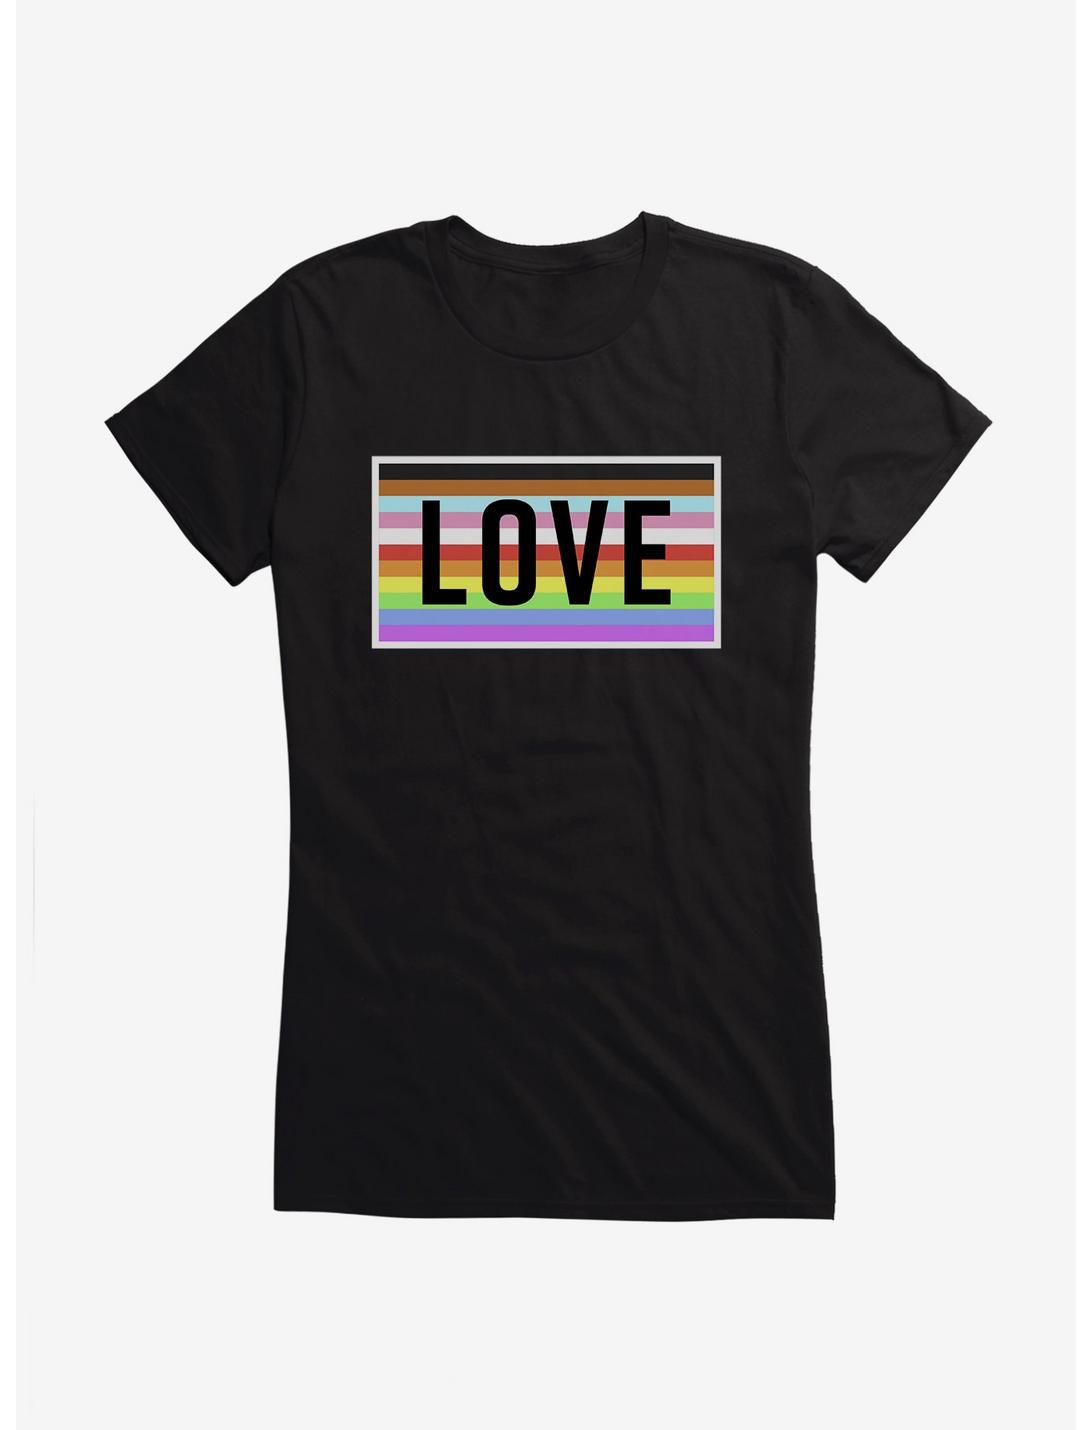 Hot Topic Foundation LOVE Girls T-Shirt, BLACK, hi-res